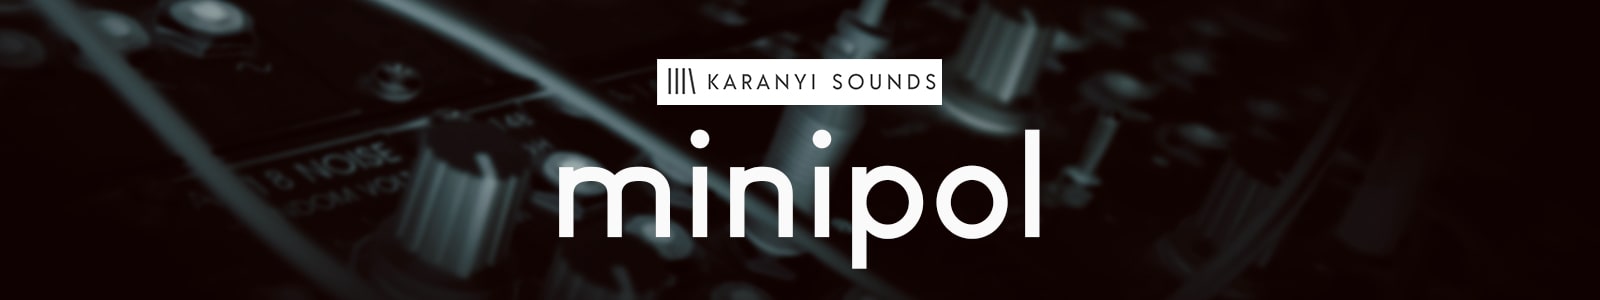 minipol by Karanyi Sounds